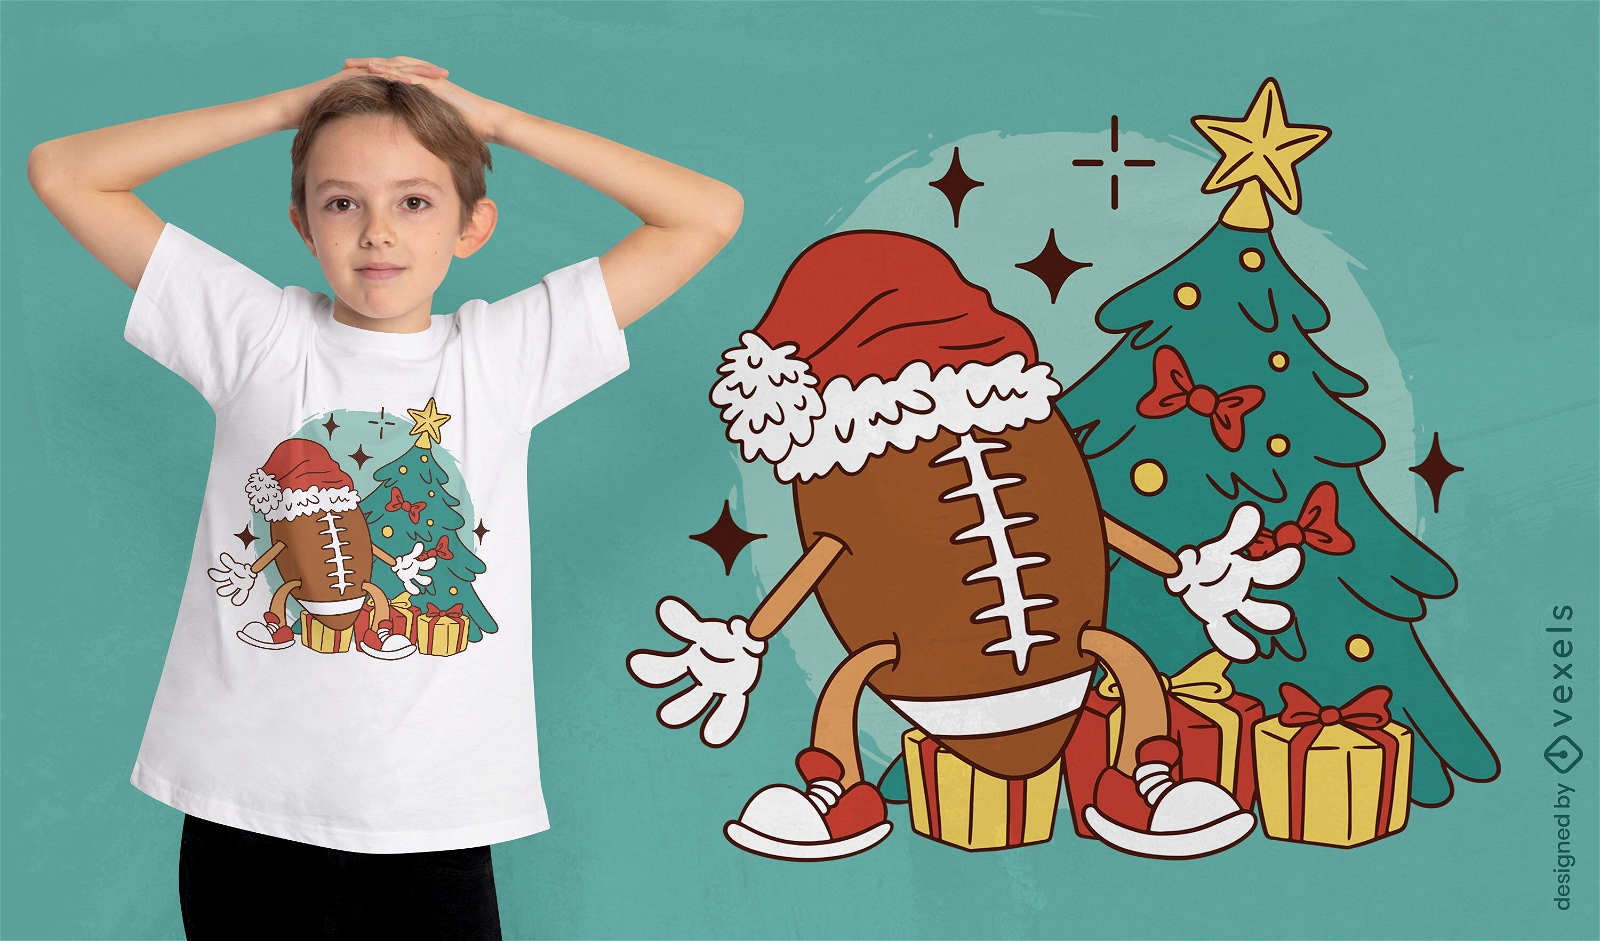 Diseño de camiseta de fútbol navideño.